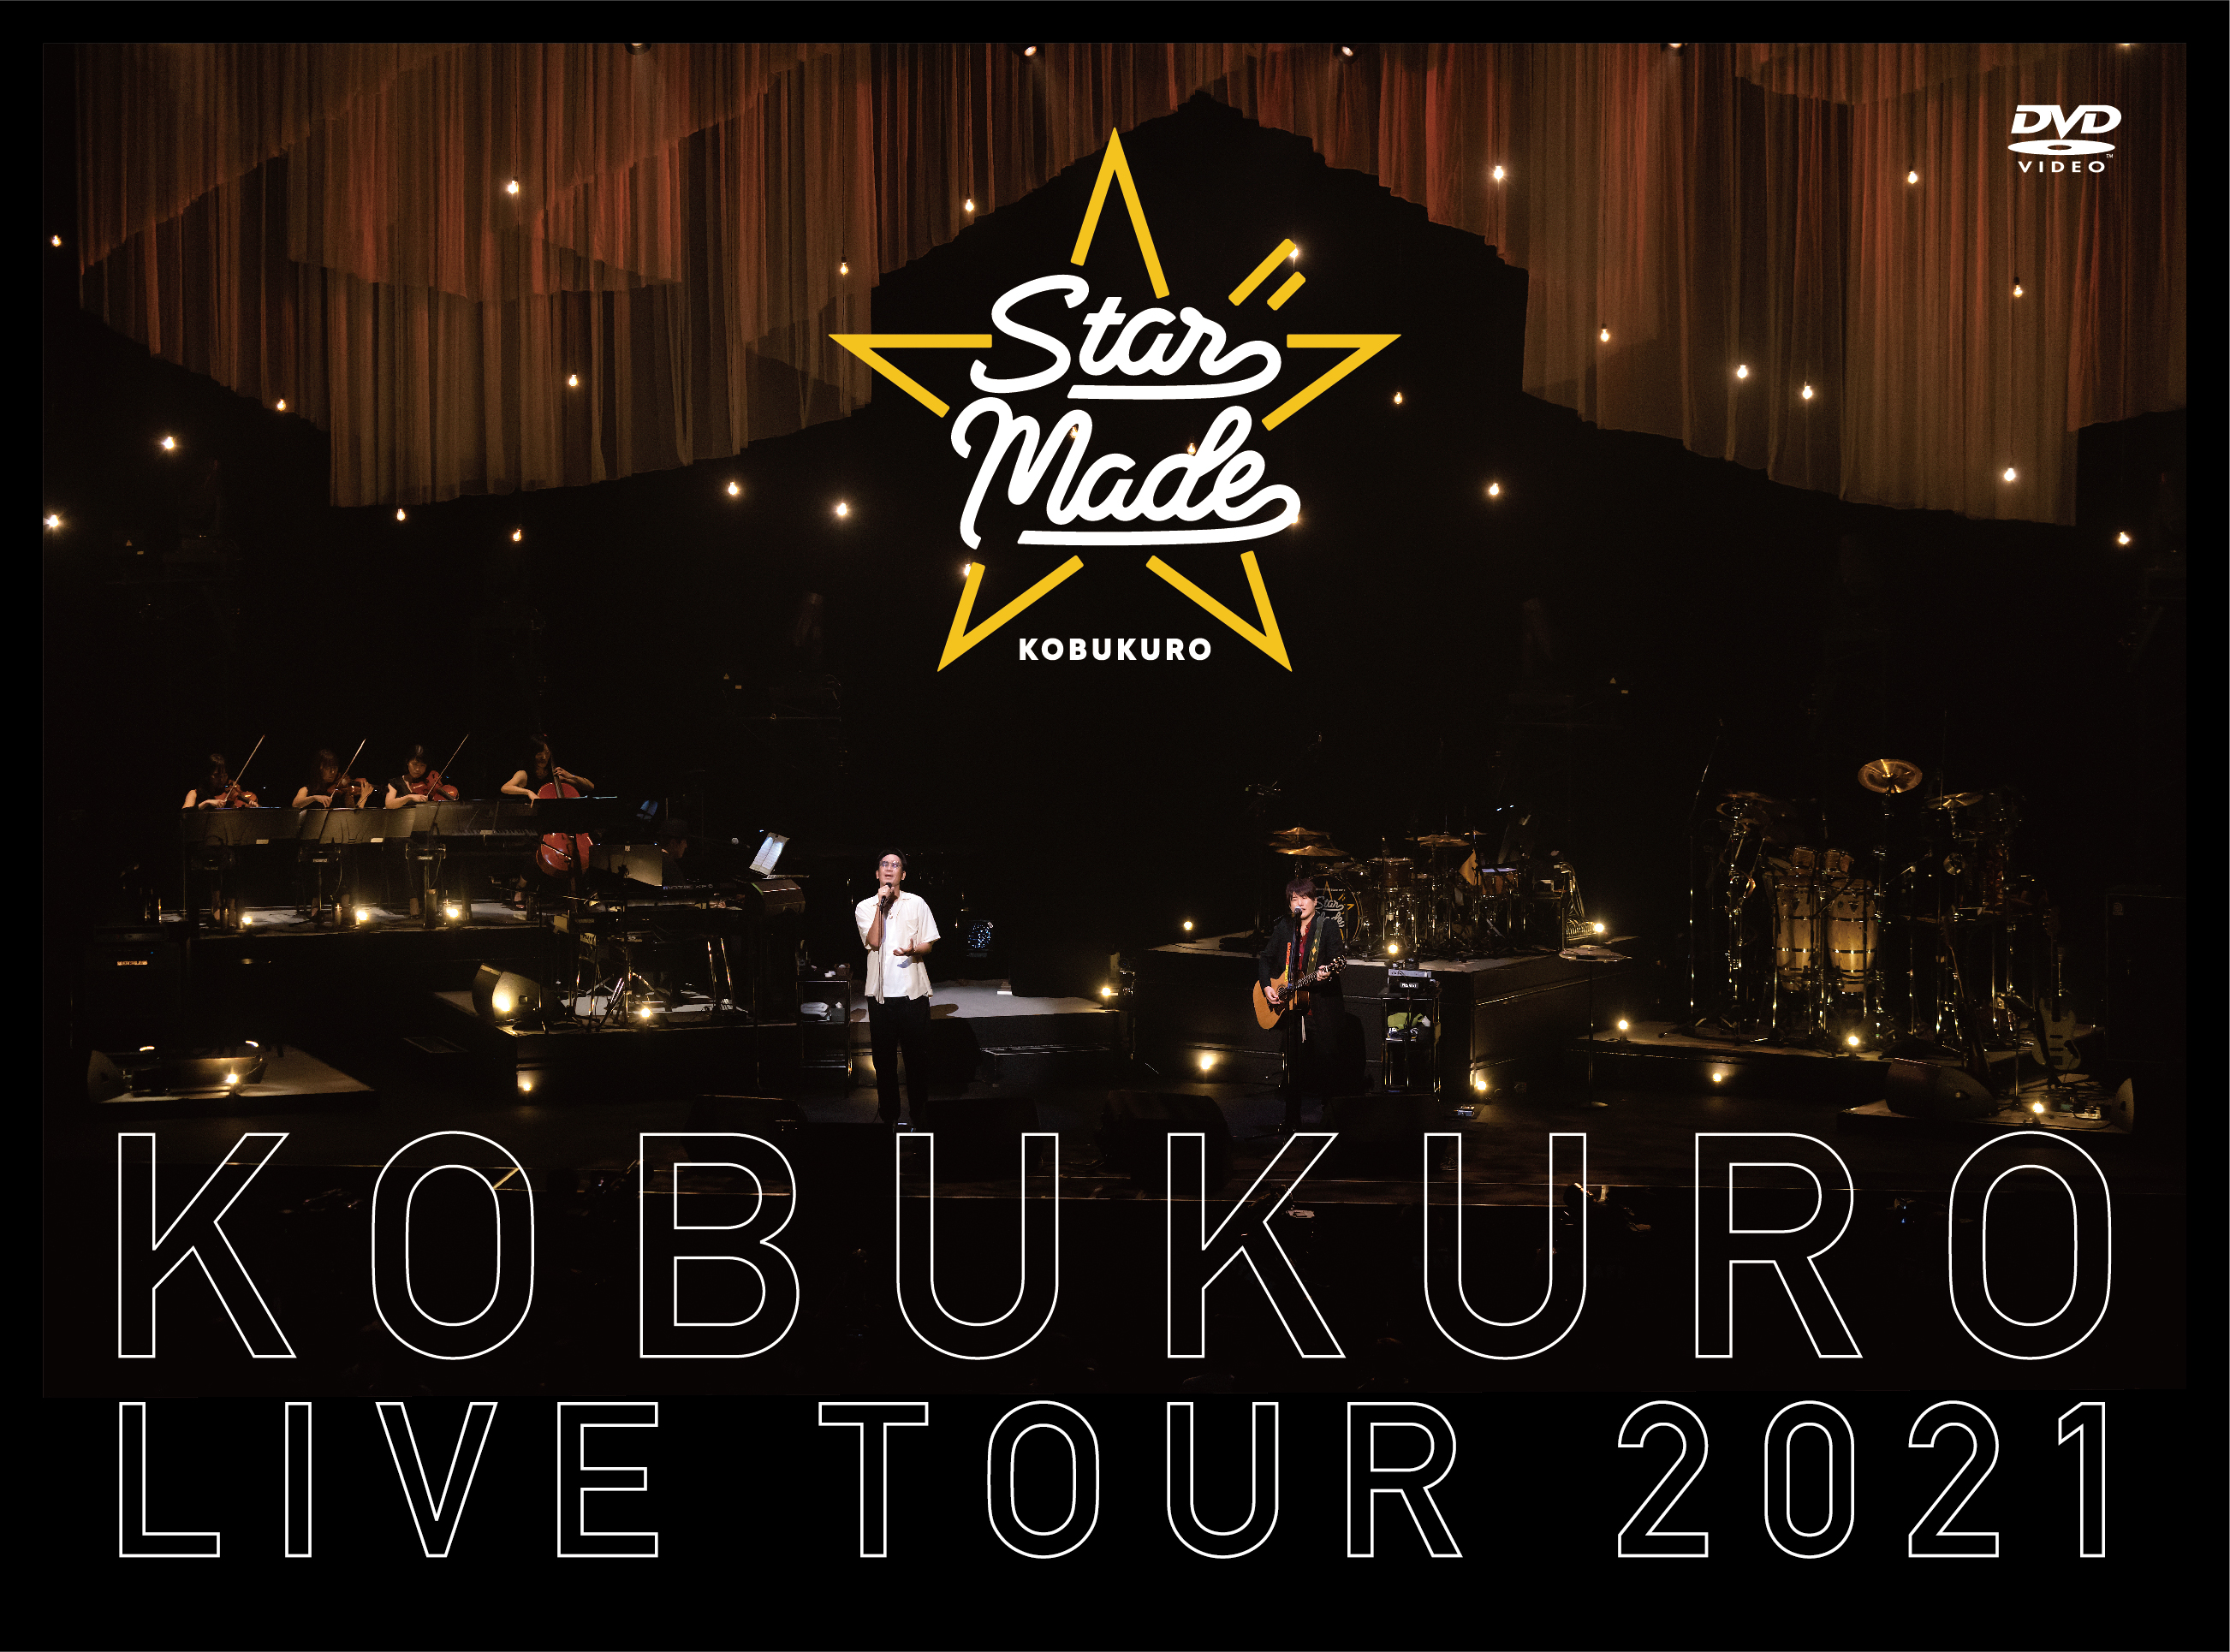 KOBUKURO LIVE TOUR 2021 "Star Made" at 東京ガーデンシアター（ファンサイト会員限定盤 DVD）